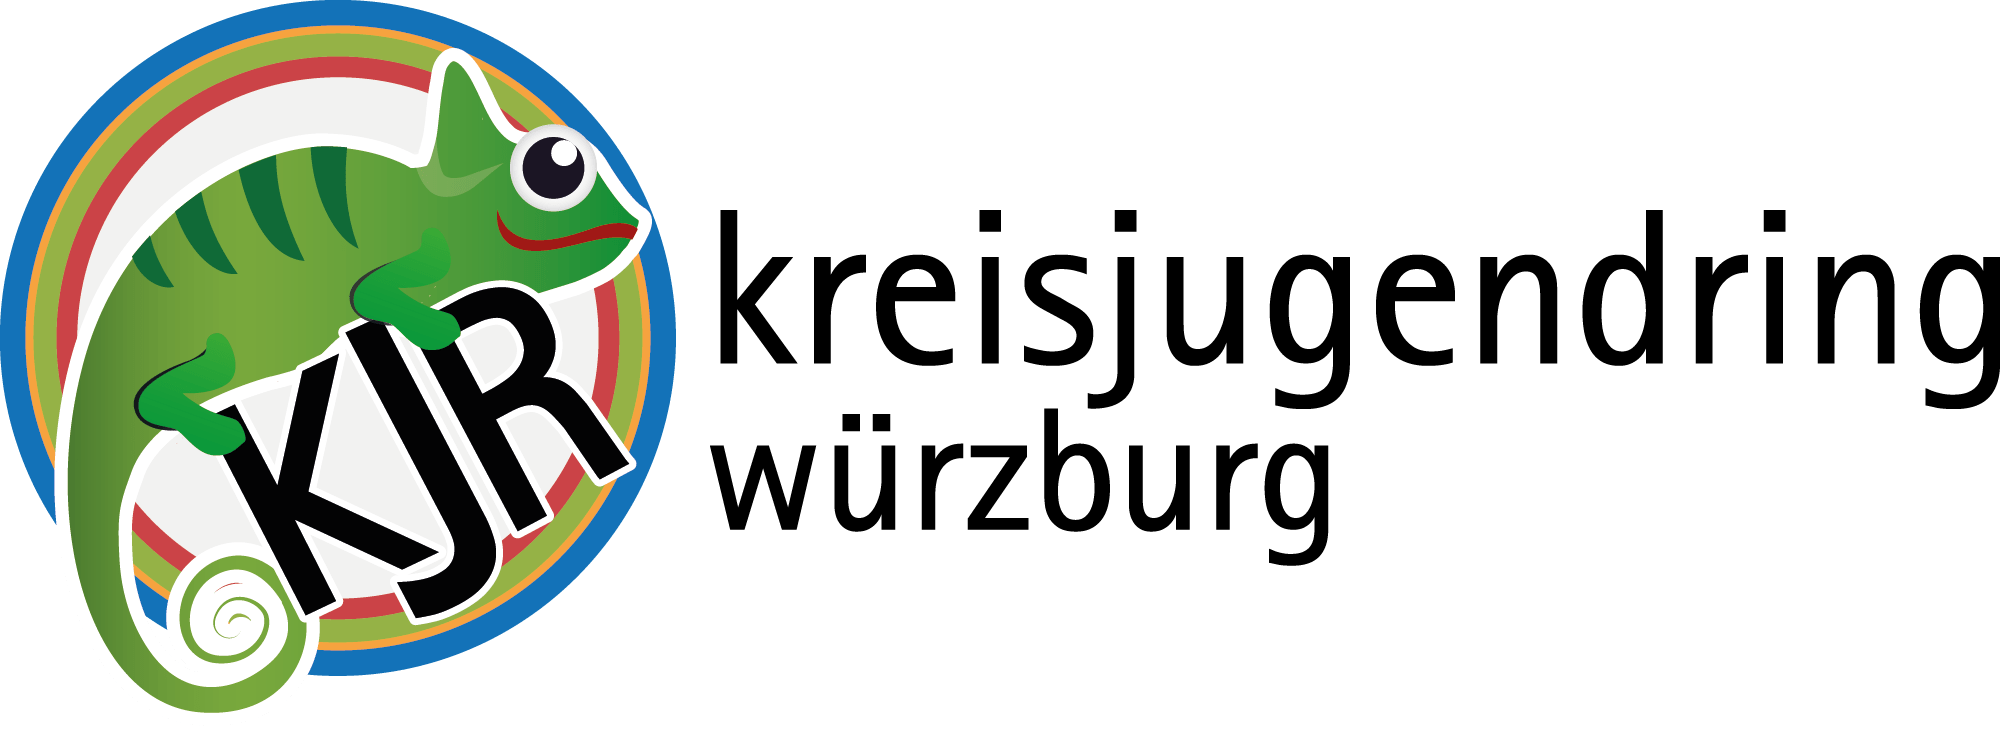 Kreisjugendring Würzburg